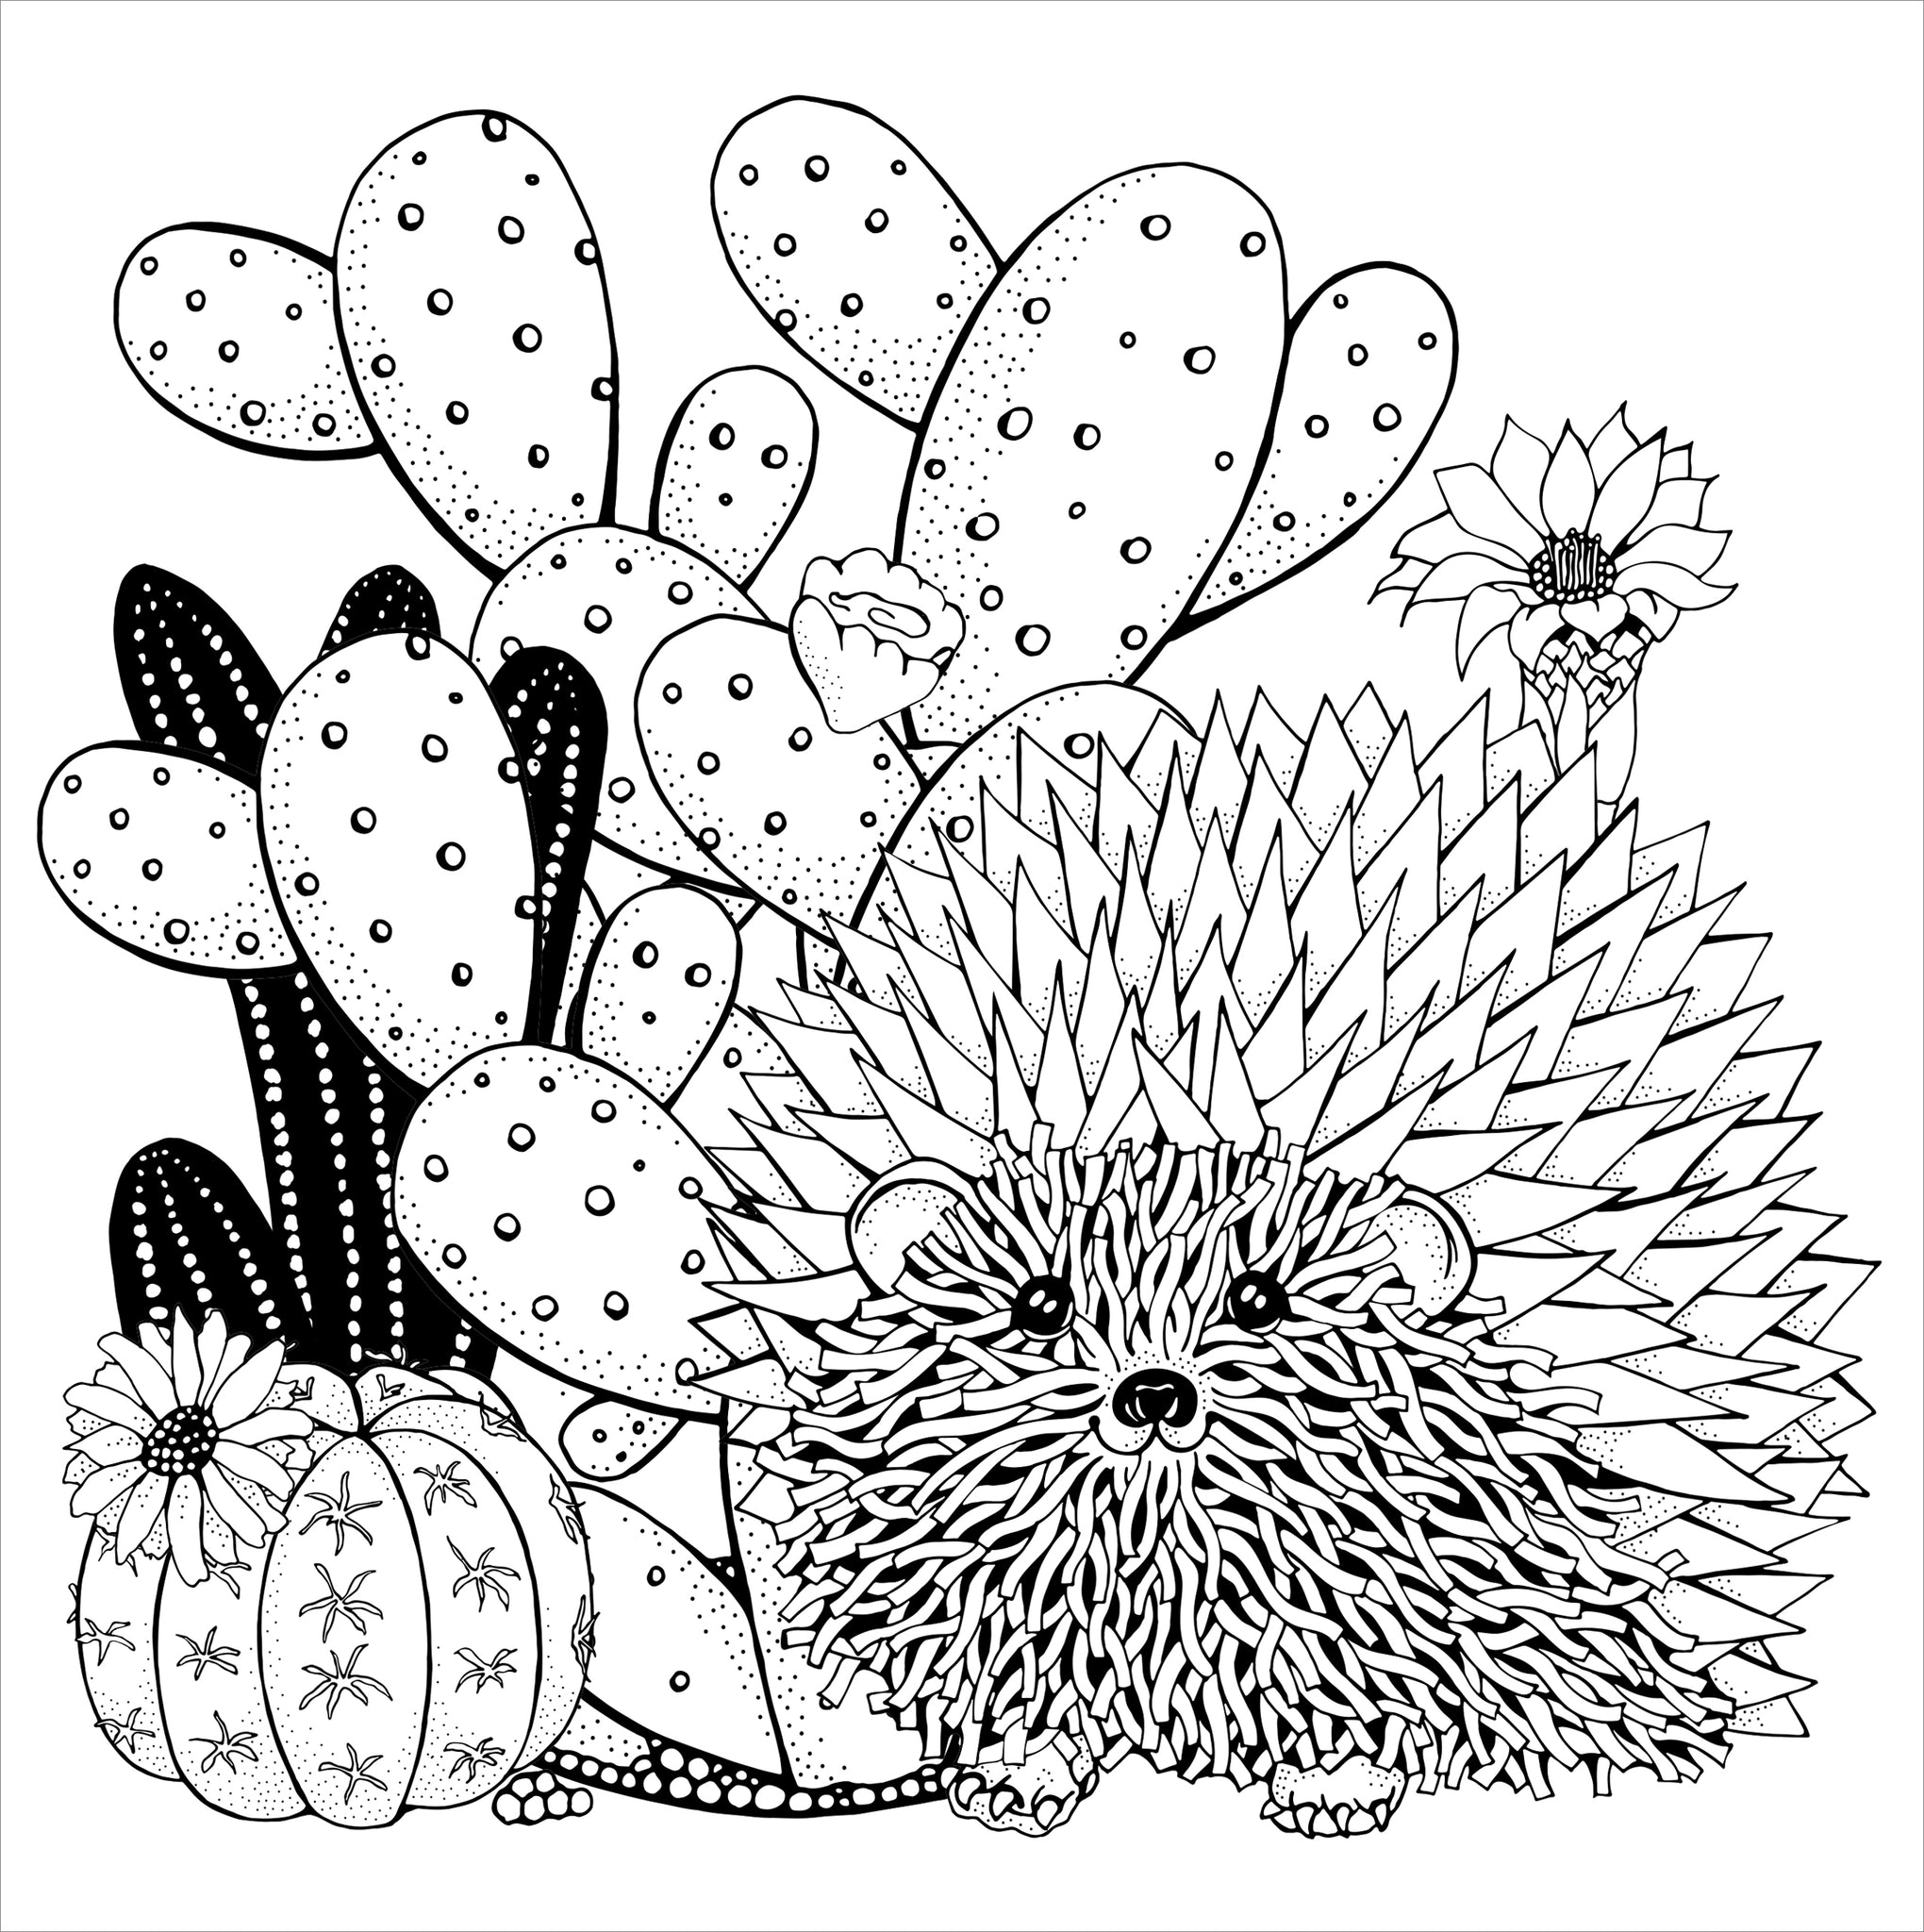 Succulents (Artist's Coloring Book) – AESOP'S FABLE